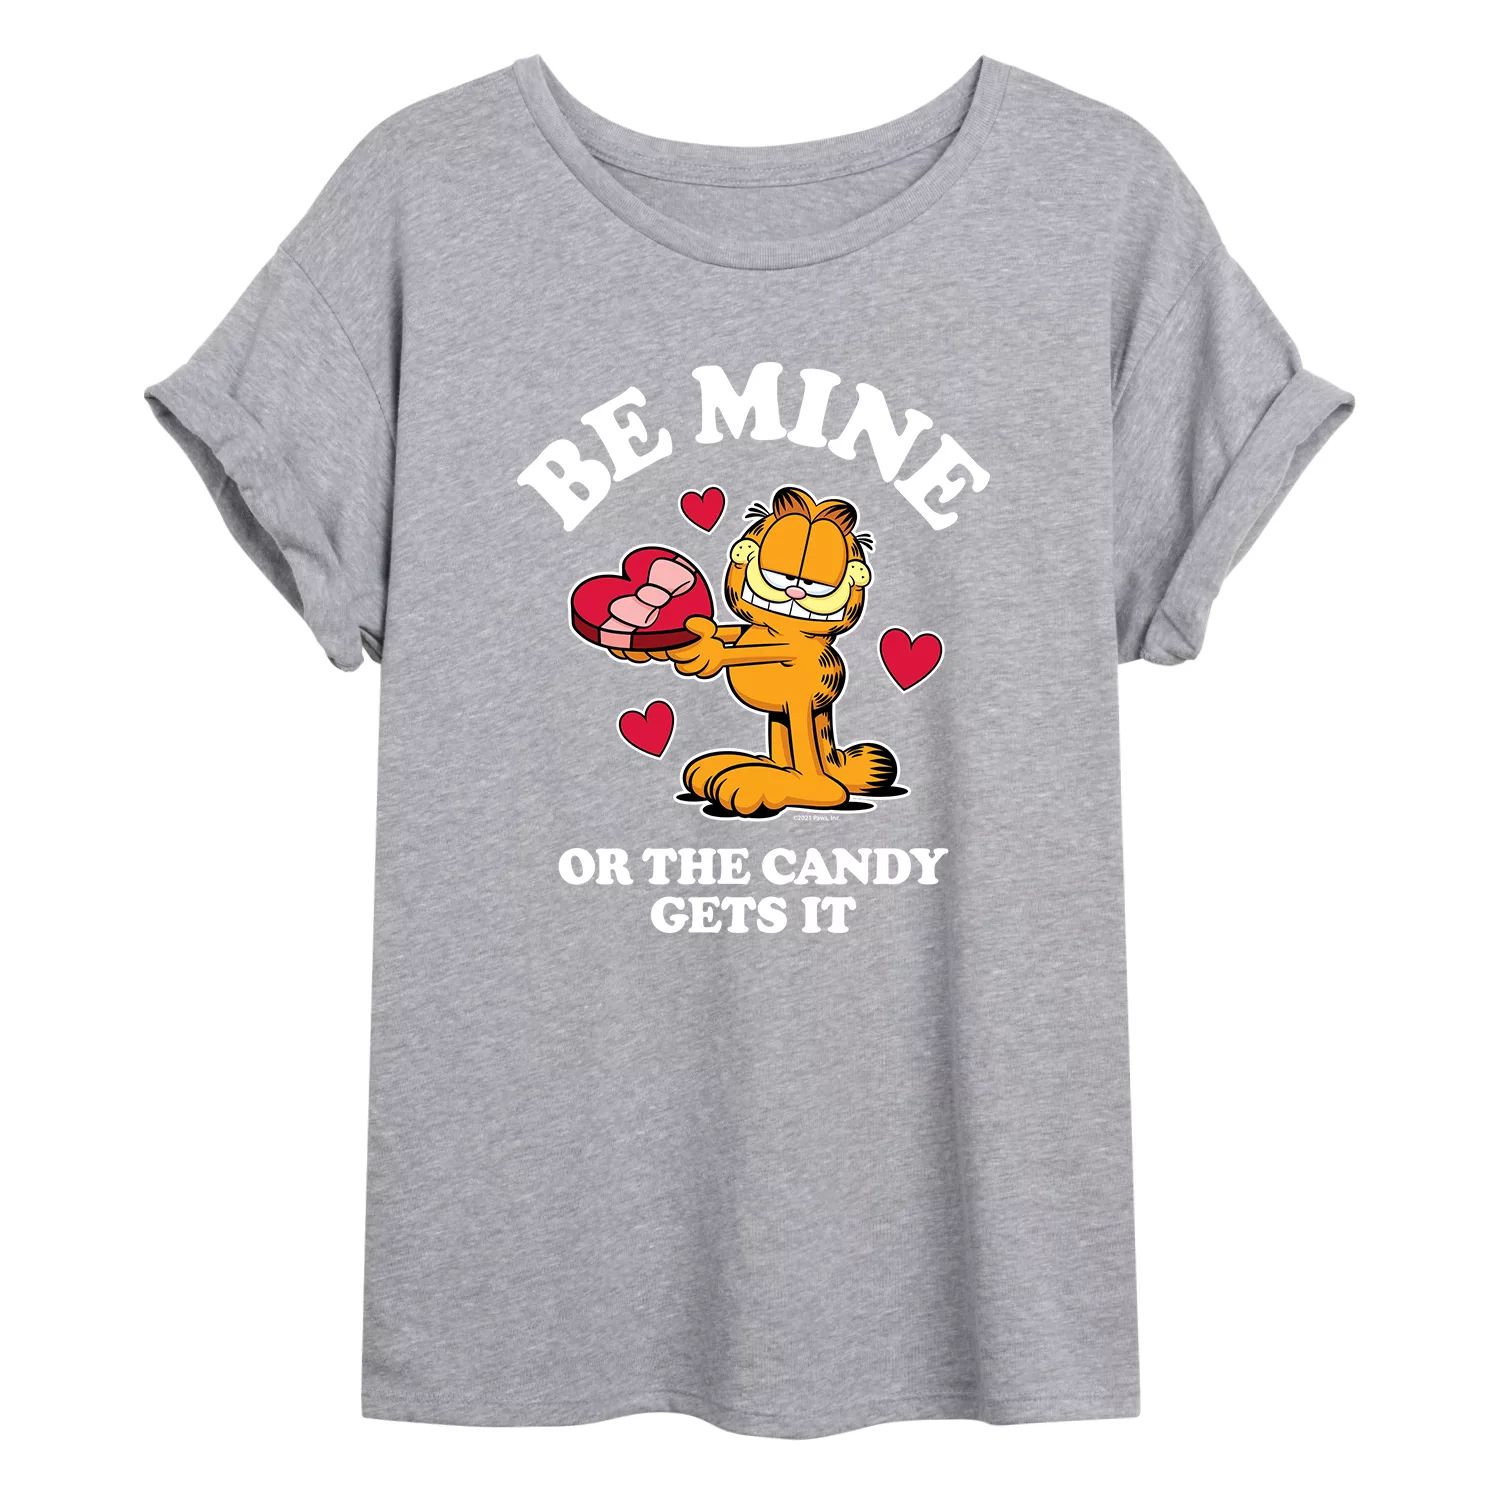 Струящаяся футболка Garfield Be Mine для юниоров Licensed Character